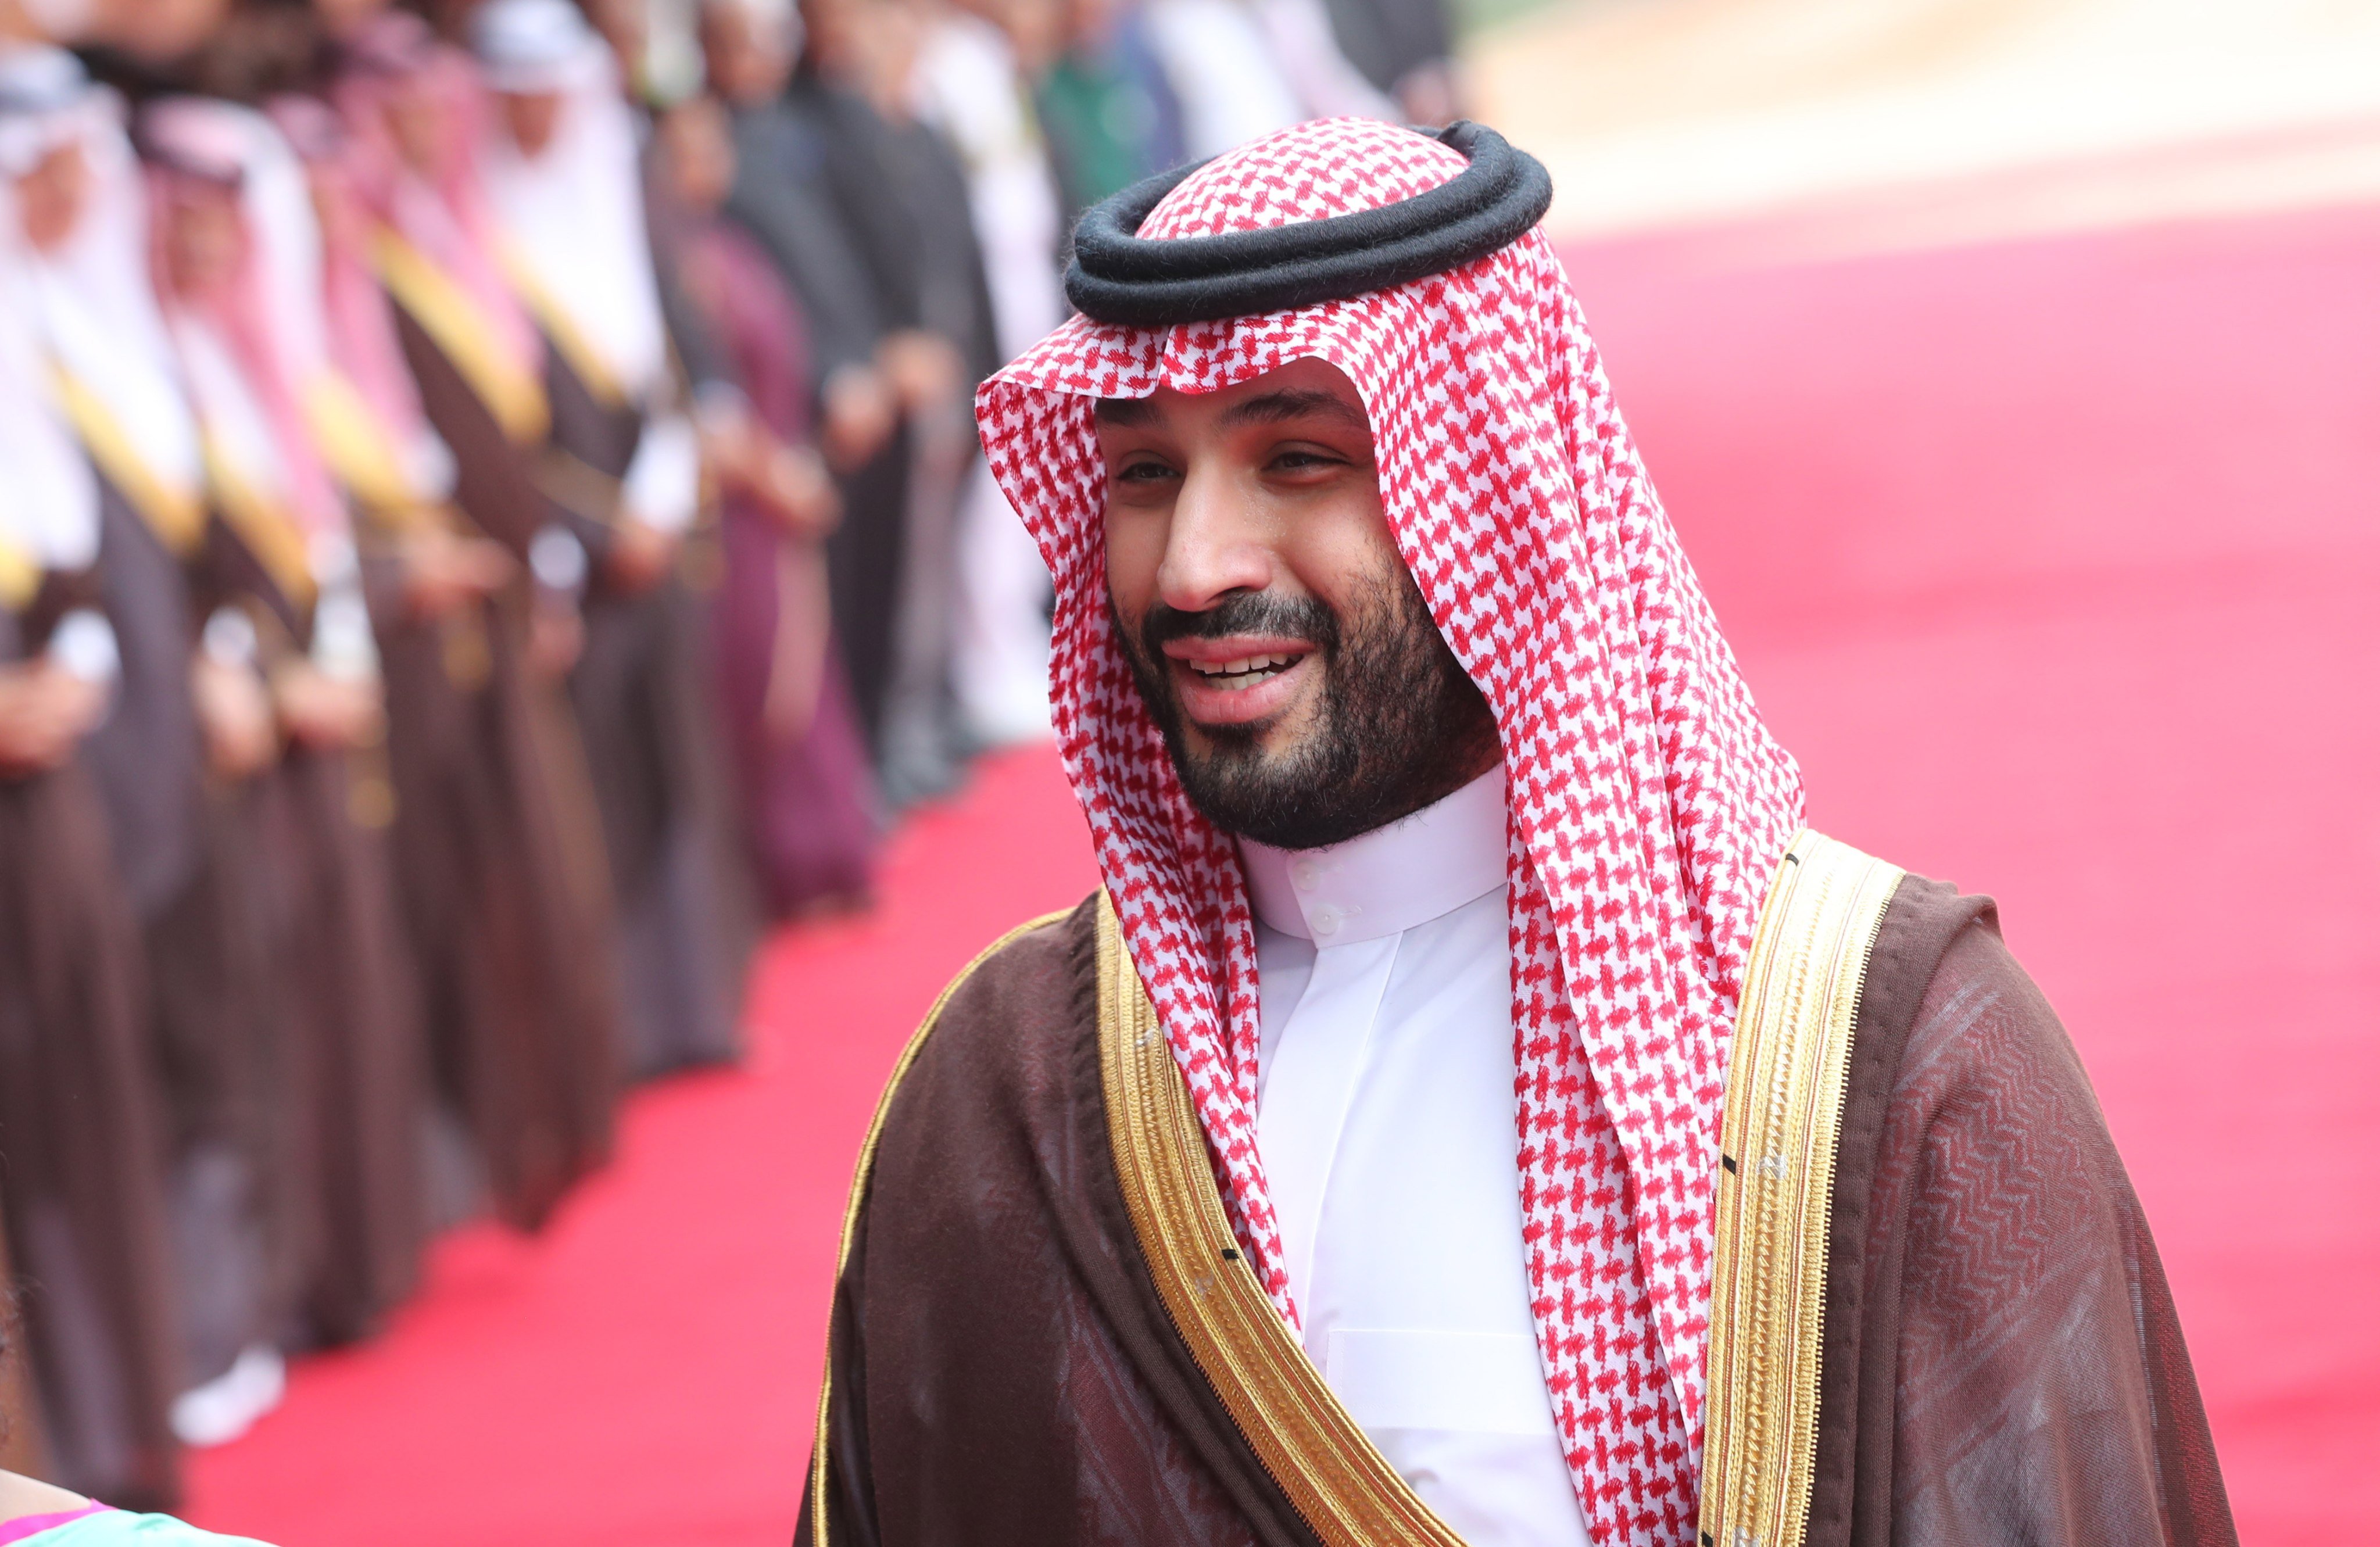 Saudi Arabia’s Crown Prince Mohammed bin Salman arrives for his welcome reception in New Delhi, India on September 11. Photo: EPA-EFE